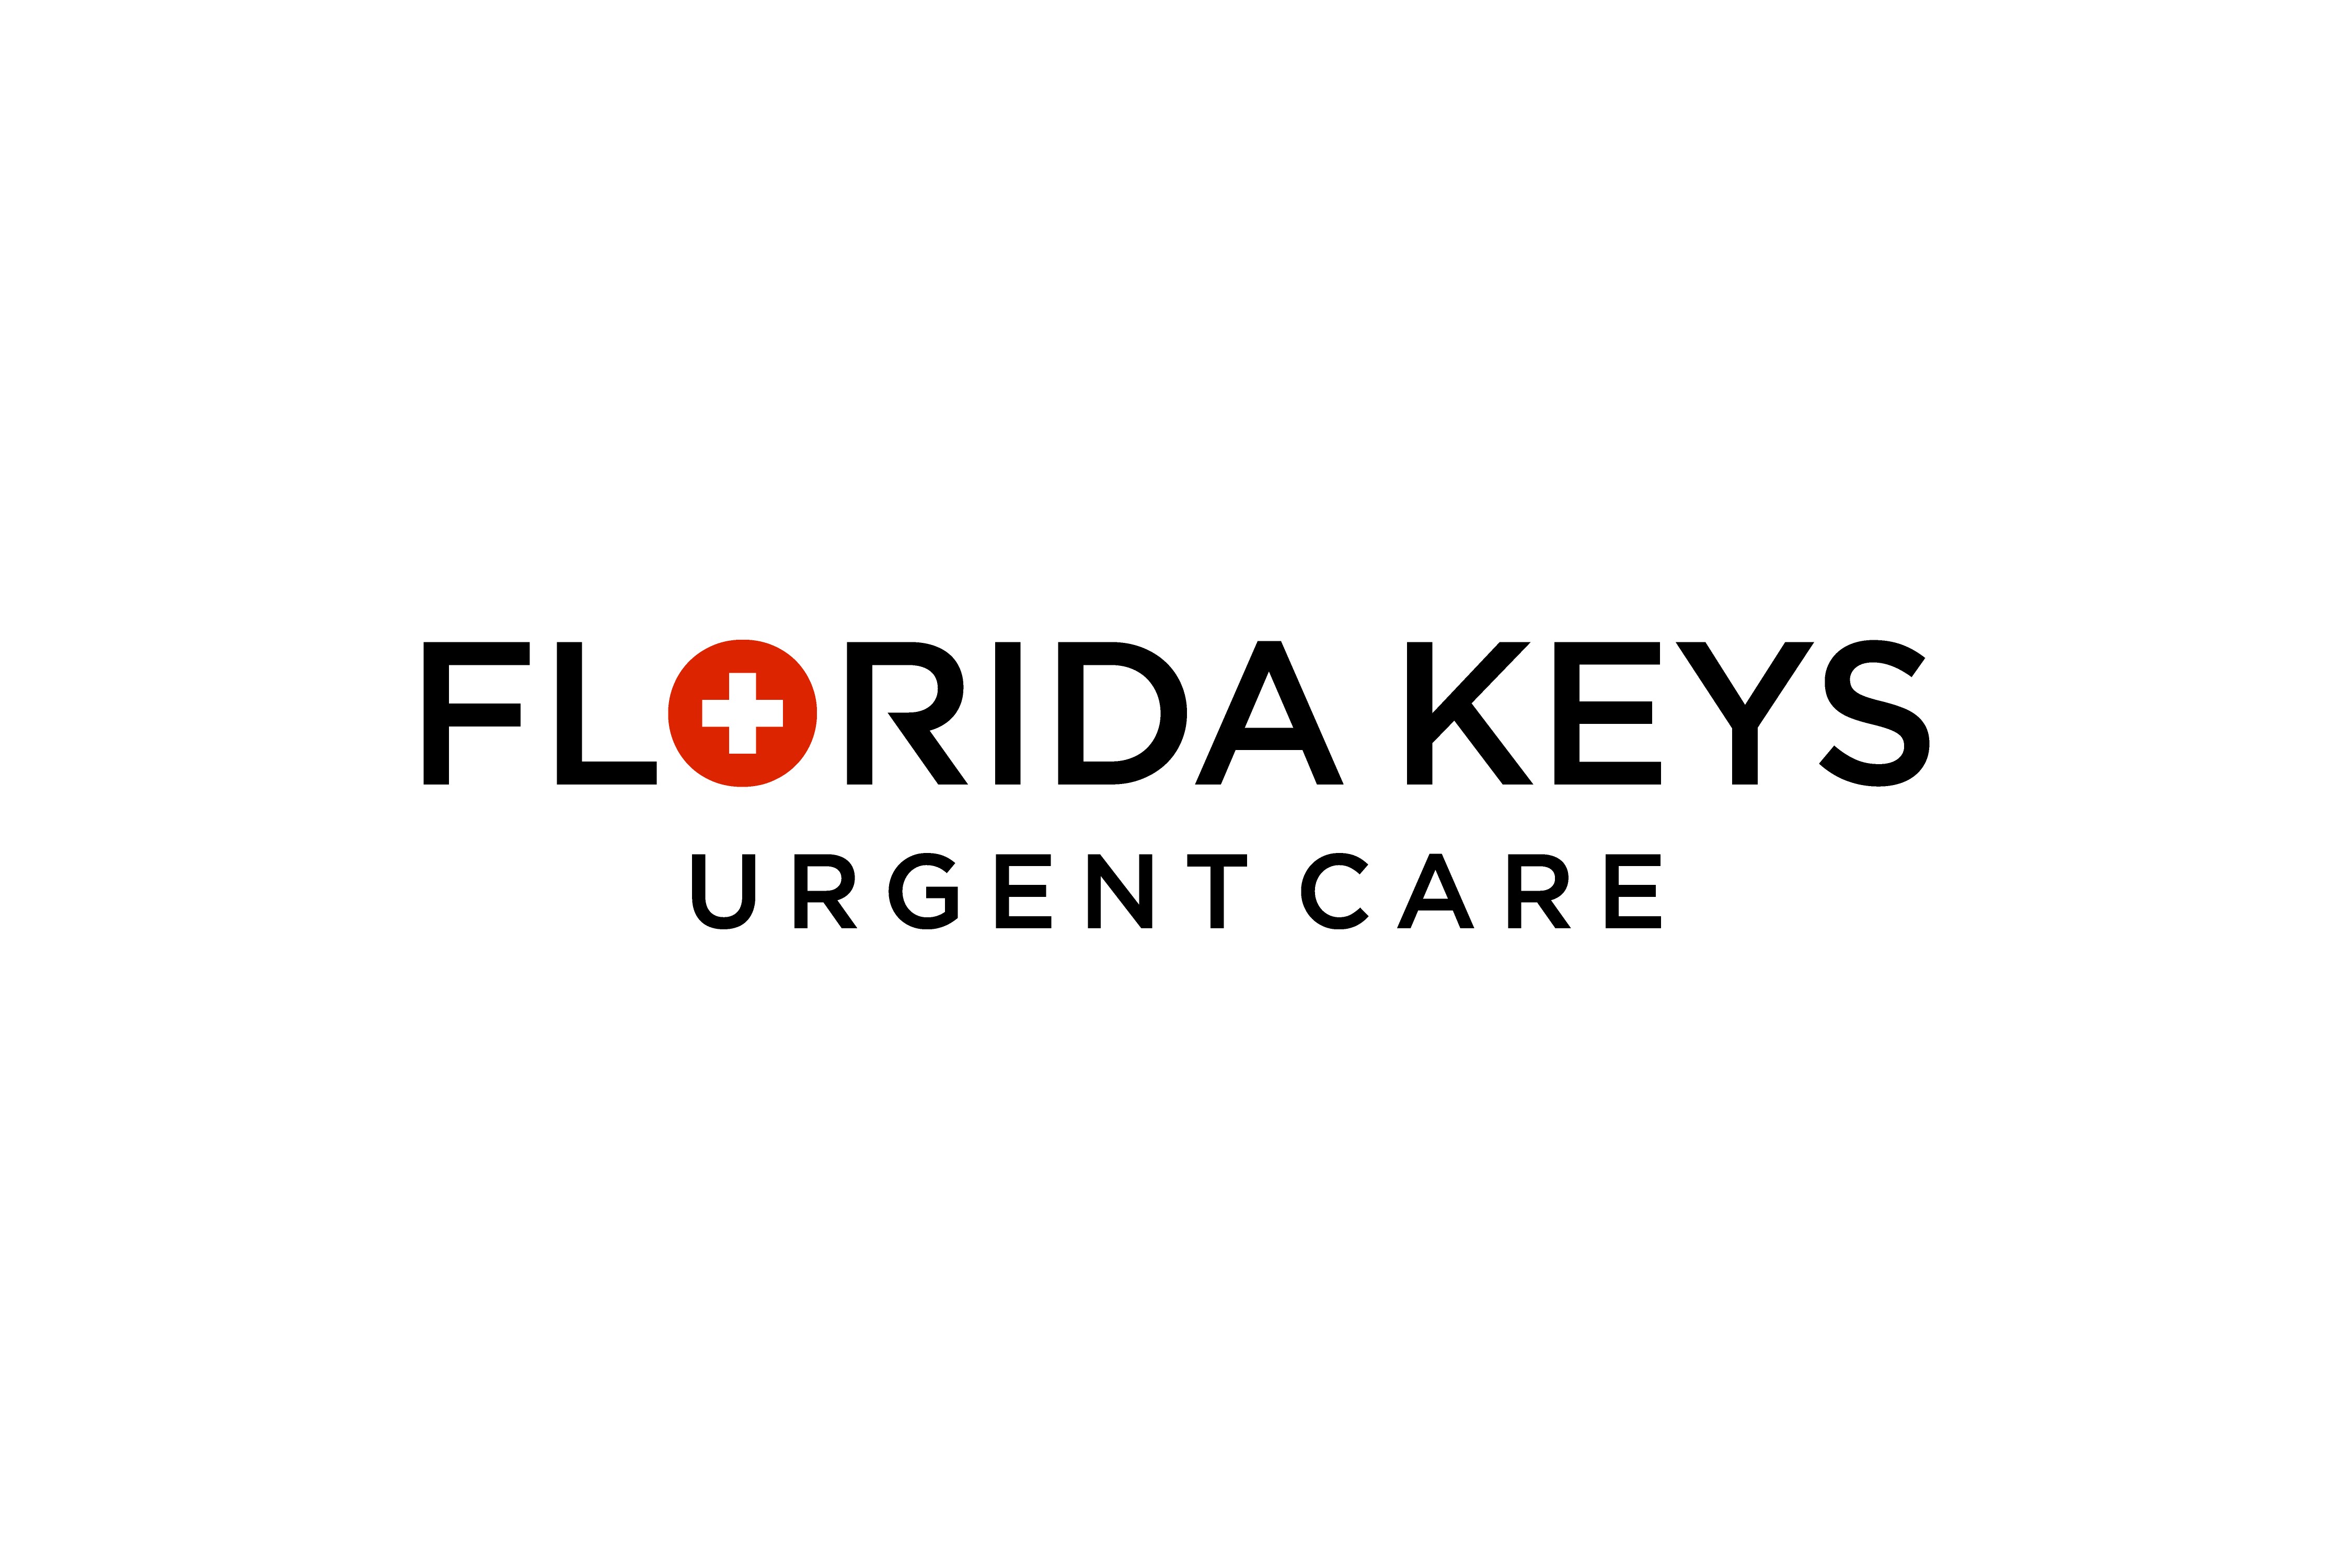 Florida Keys Urgent Care, LLC